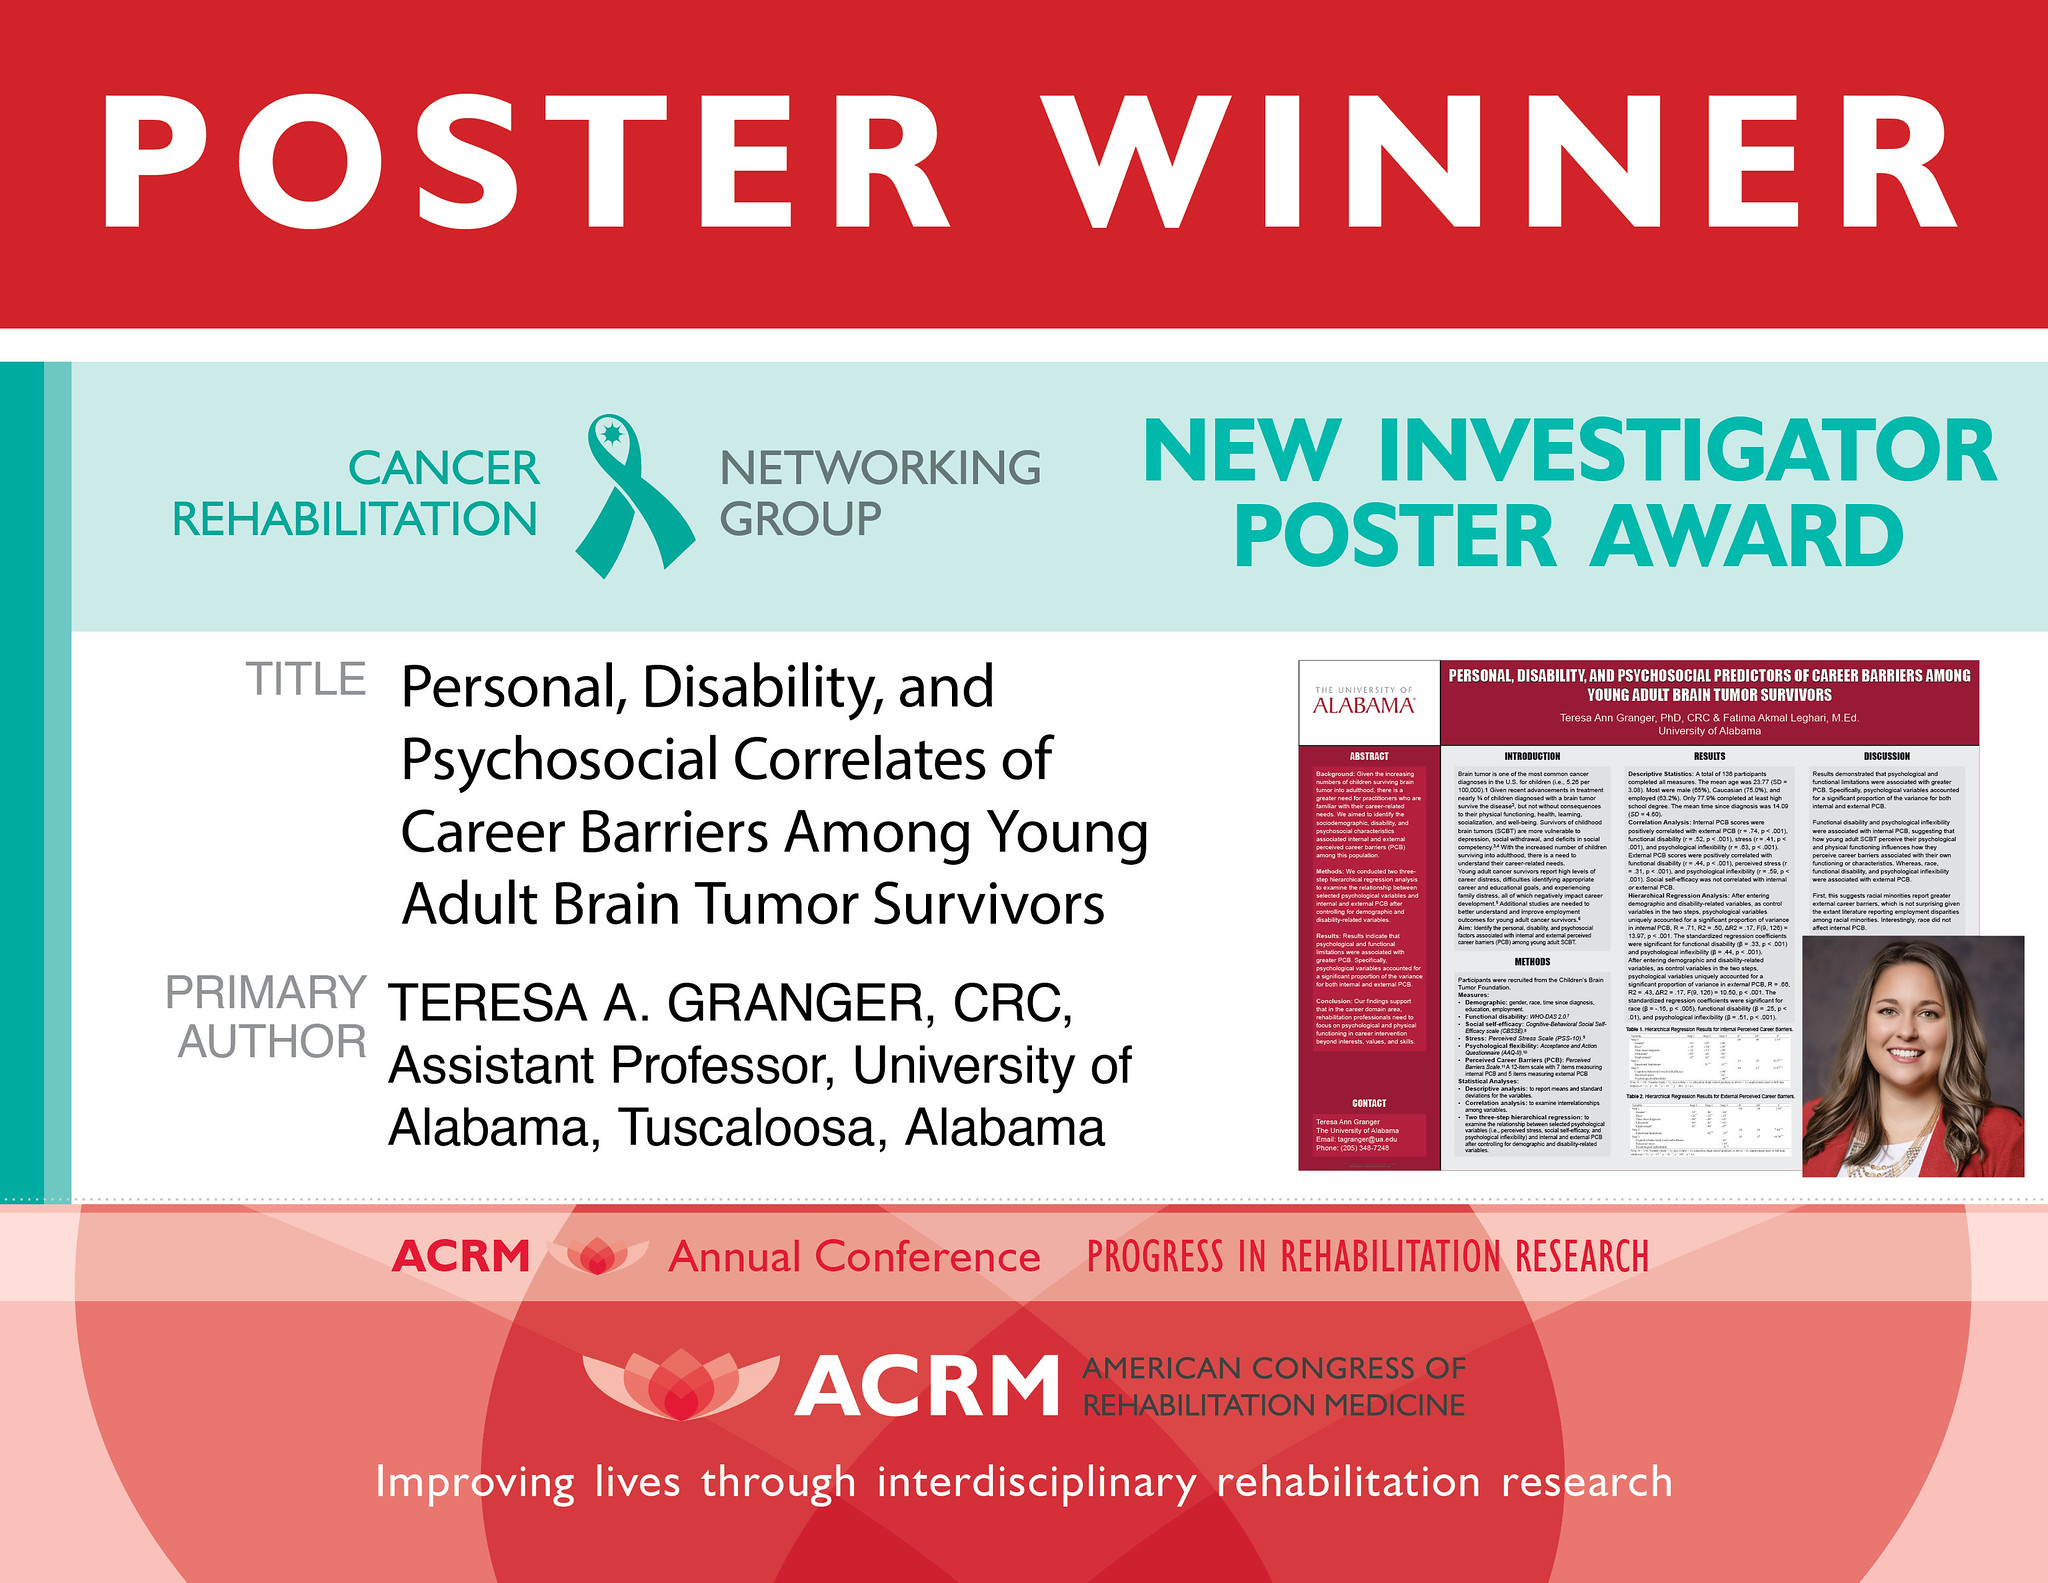 New Investigator Poster Award in Cancer Rehabilitation